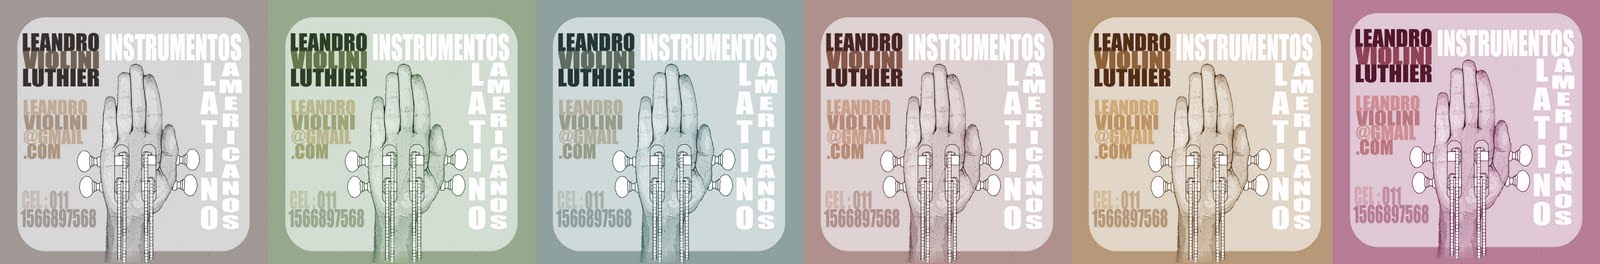 Luthier Leandro Violini